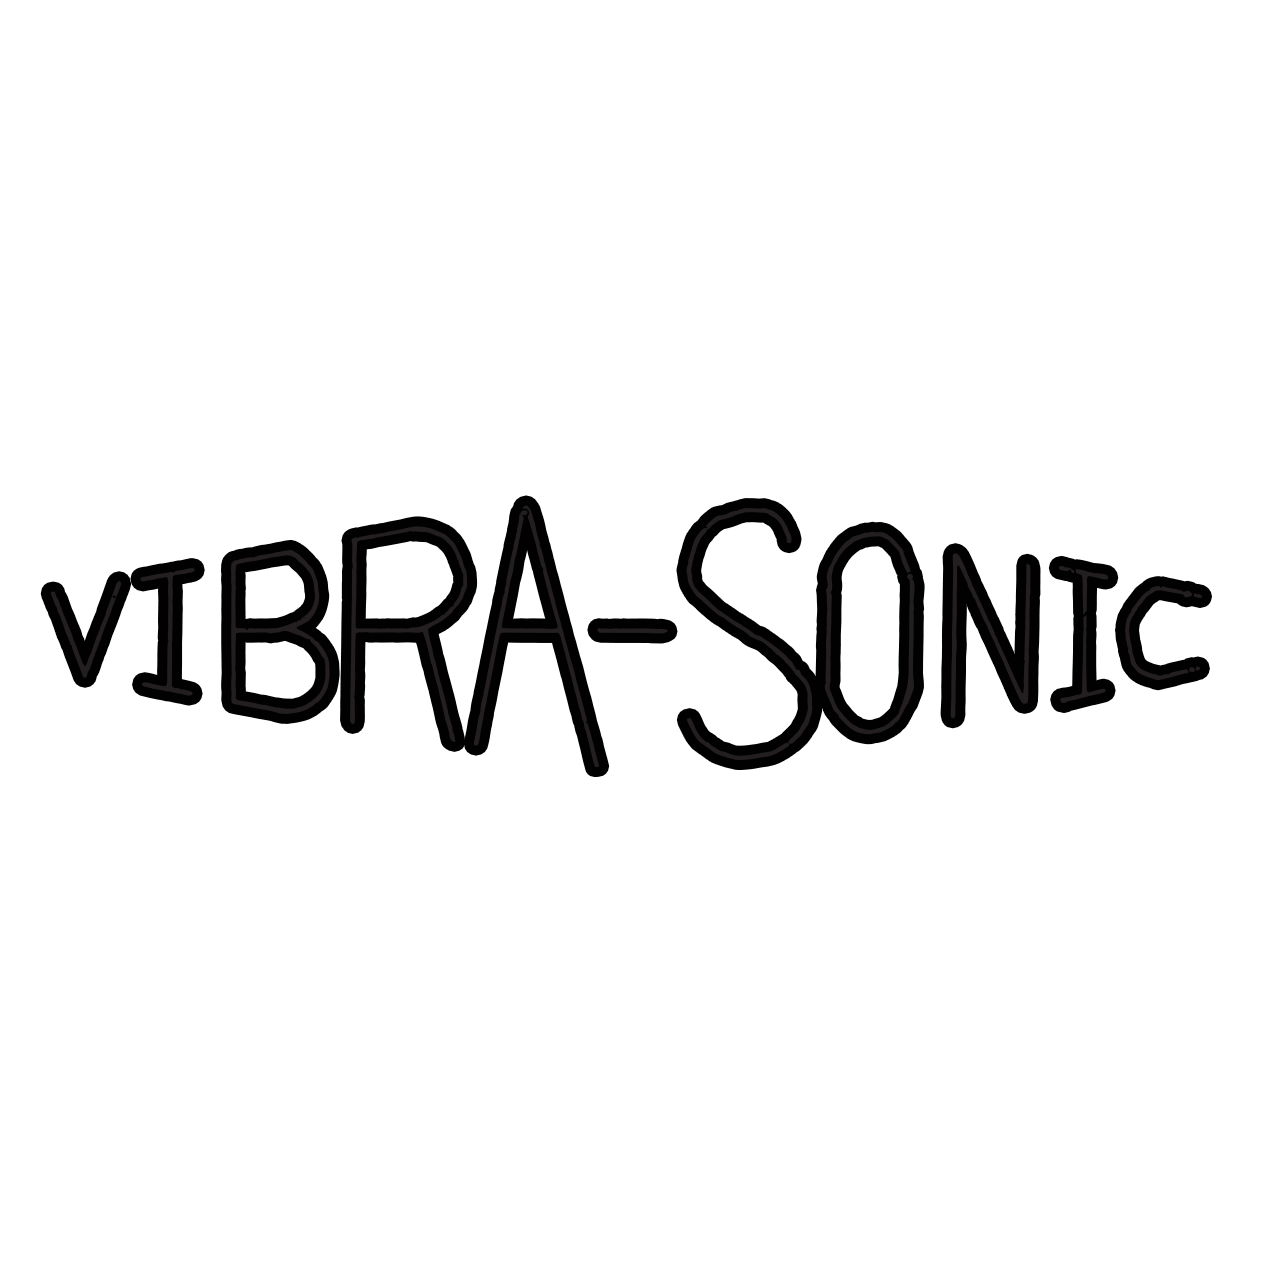 VibraSonic Label